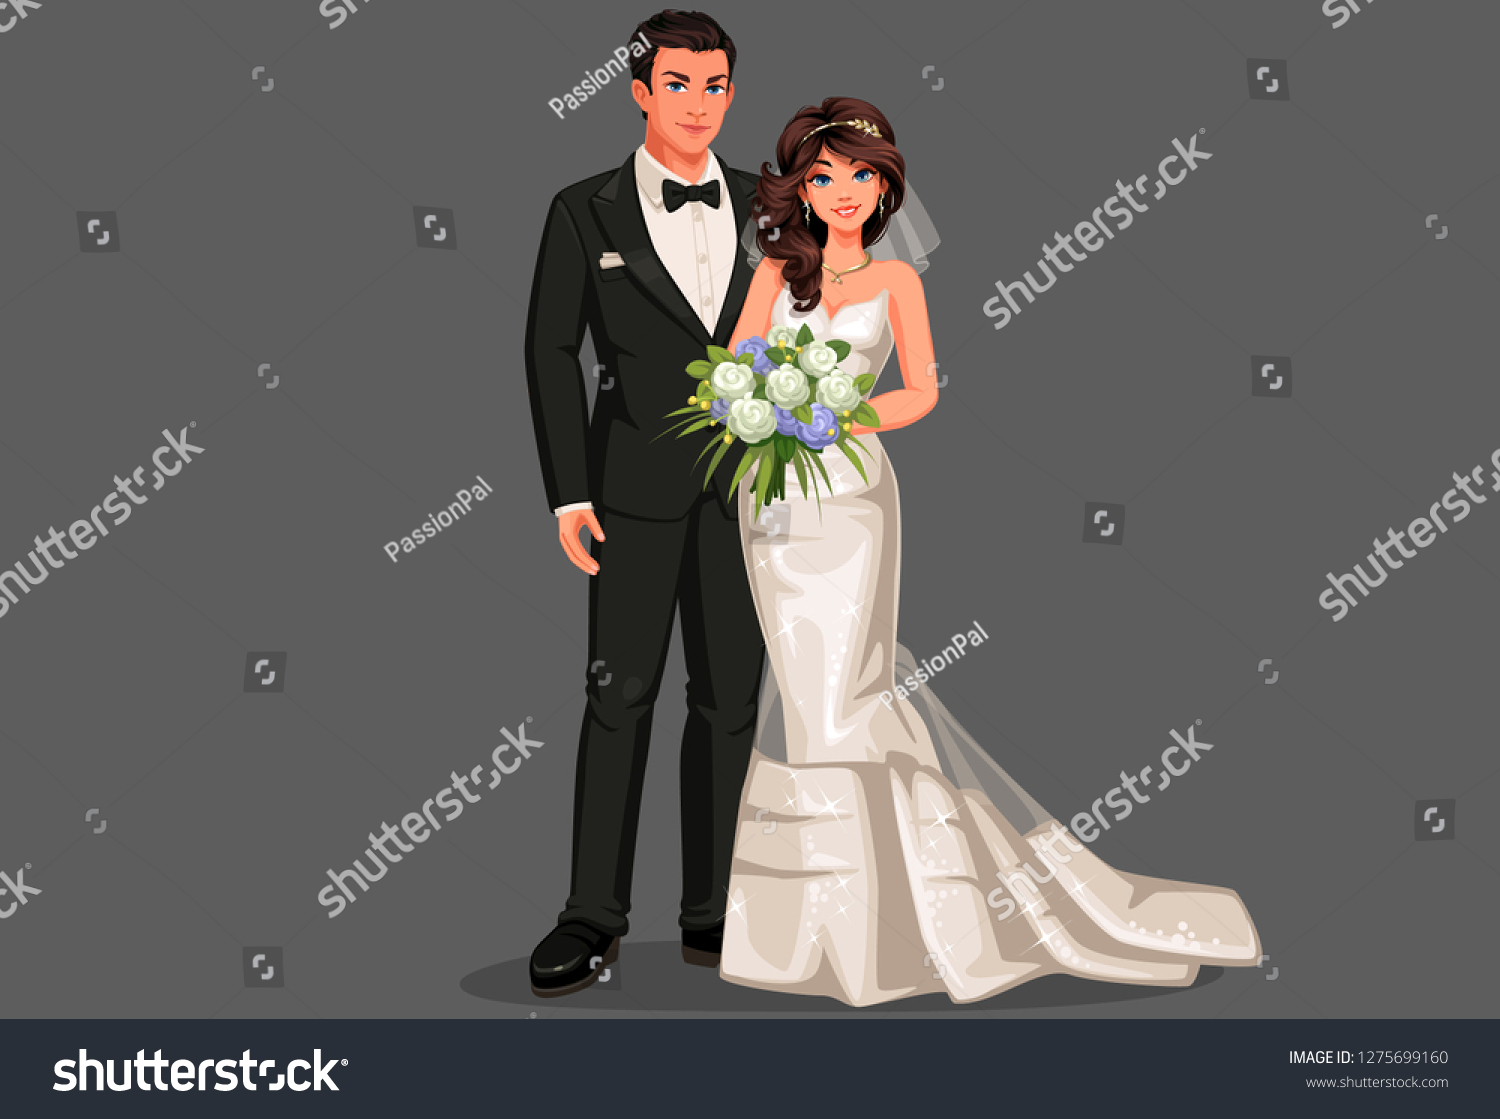 6,982 Christian wedding vector Images, Stock Photos & Vectors ...